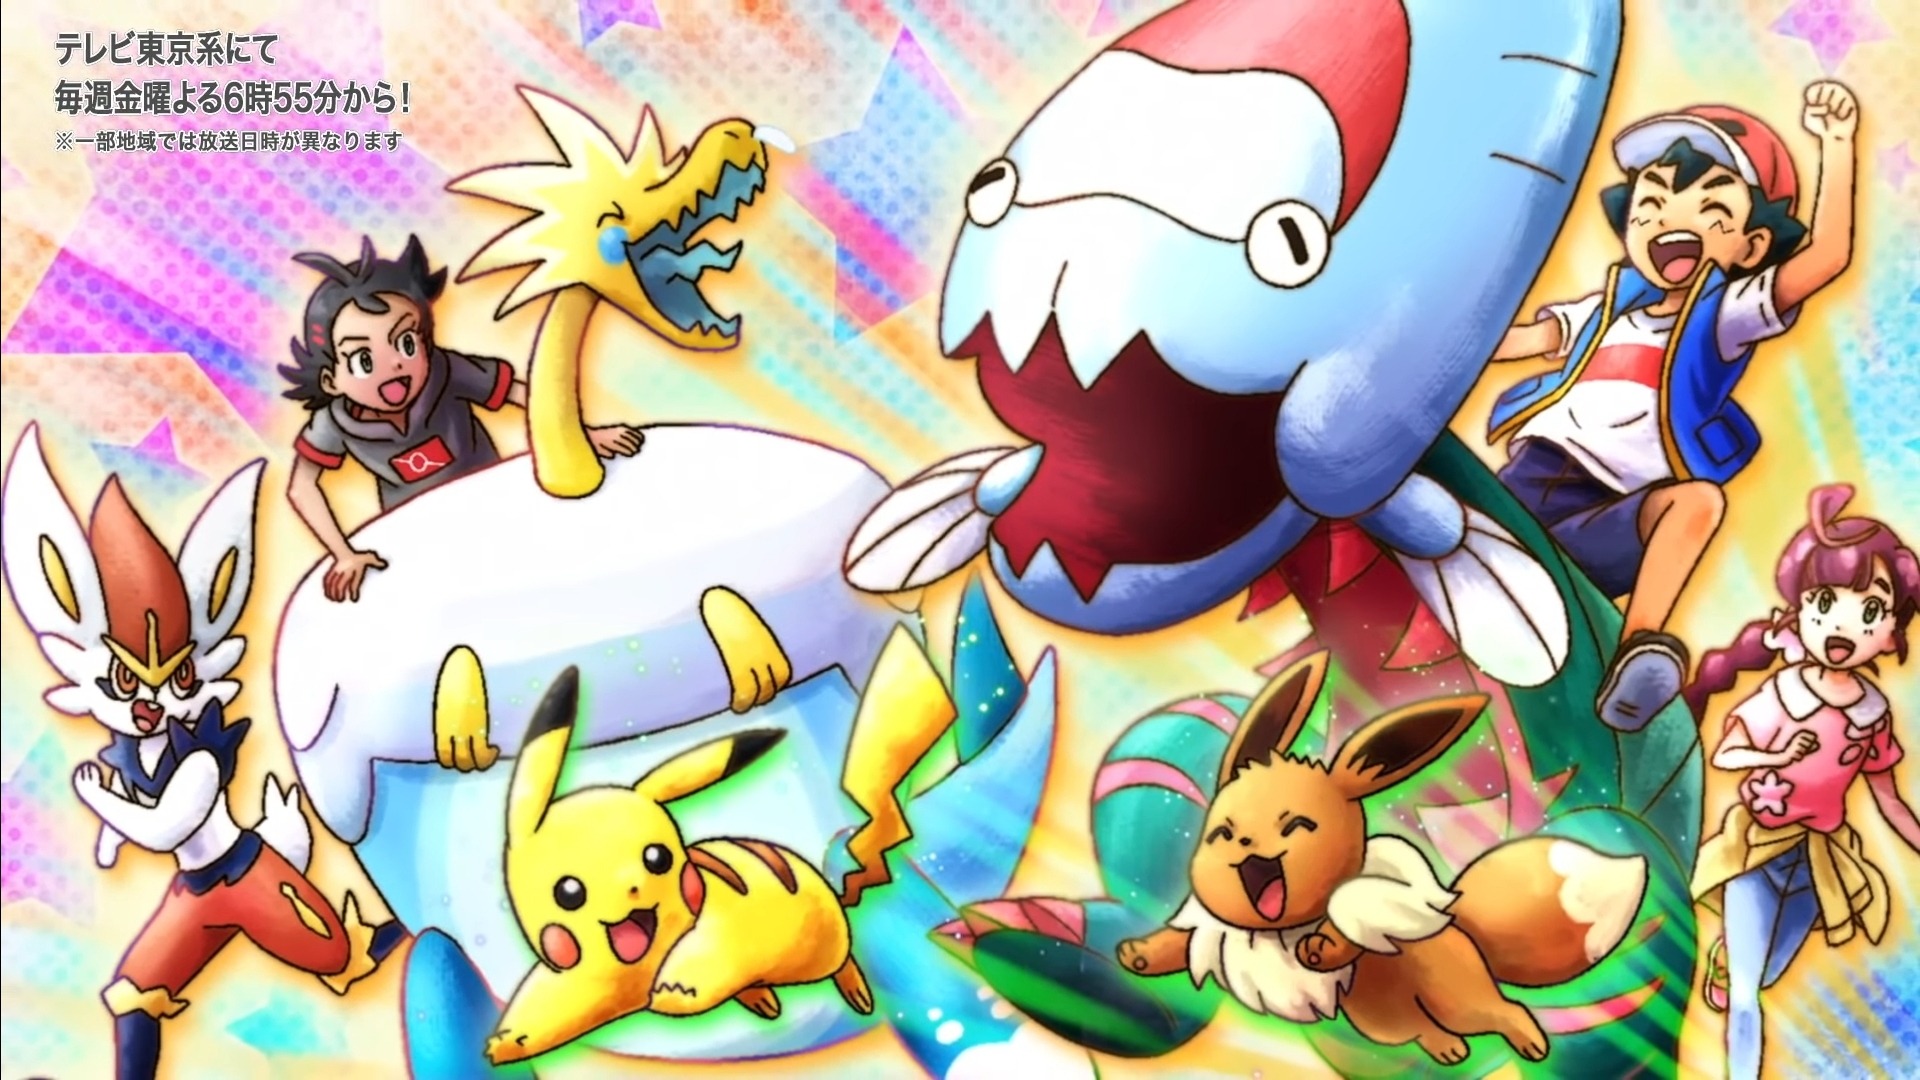 Download Goh (Pokémon) wallpaper for mobile phone, free Goh (Pokémon) HD picture